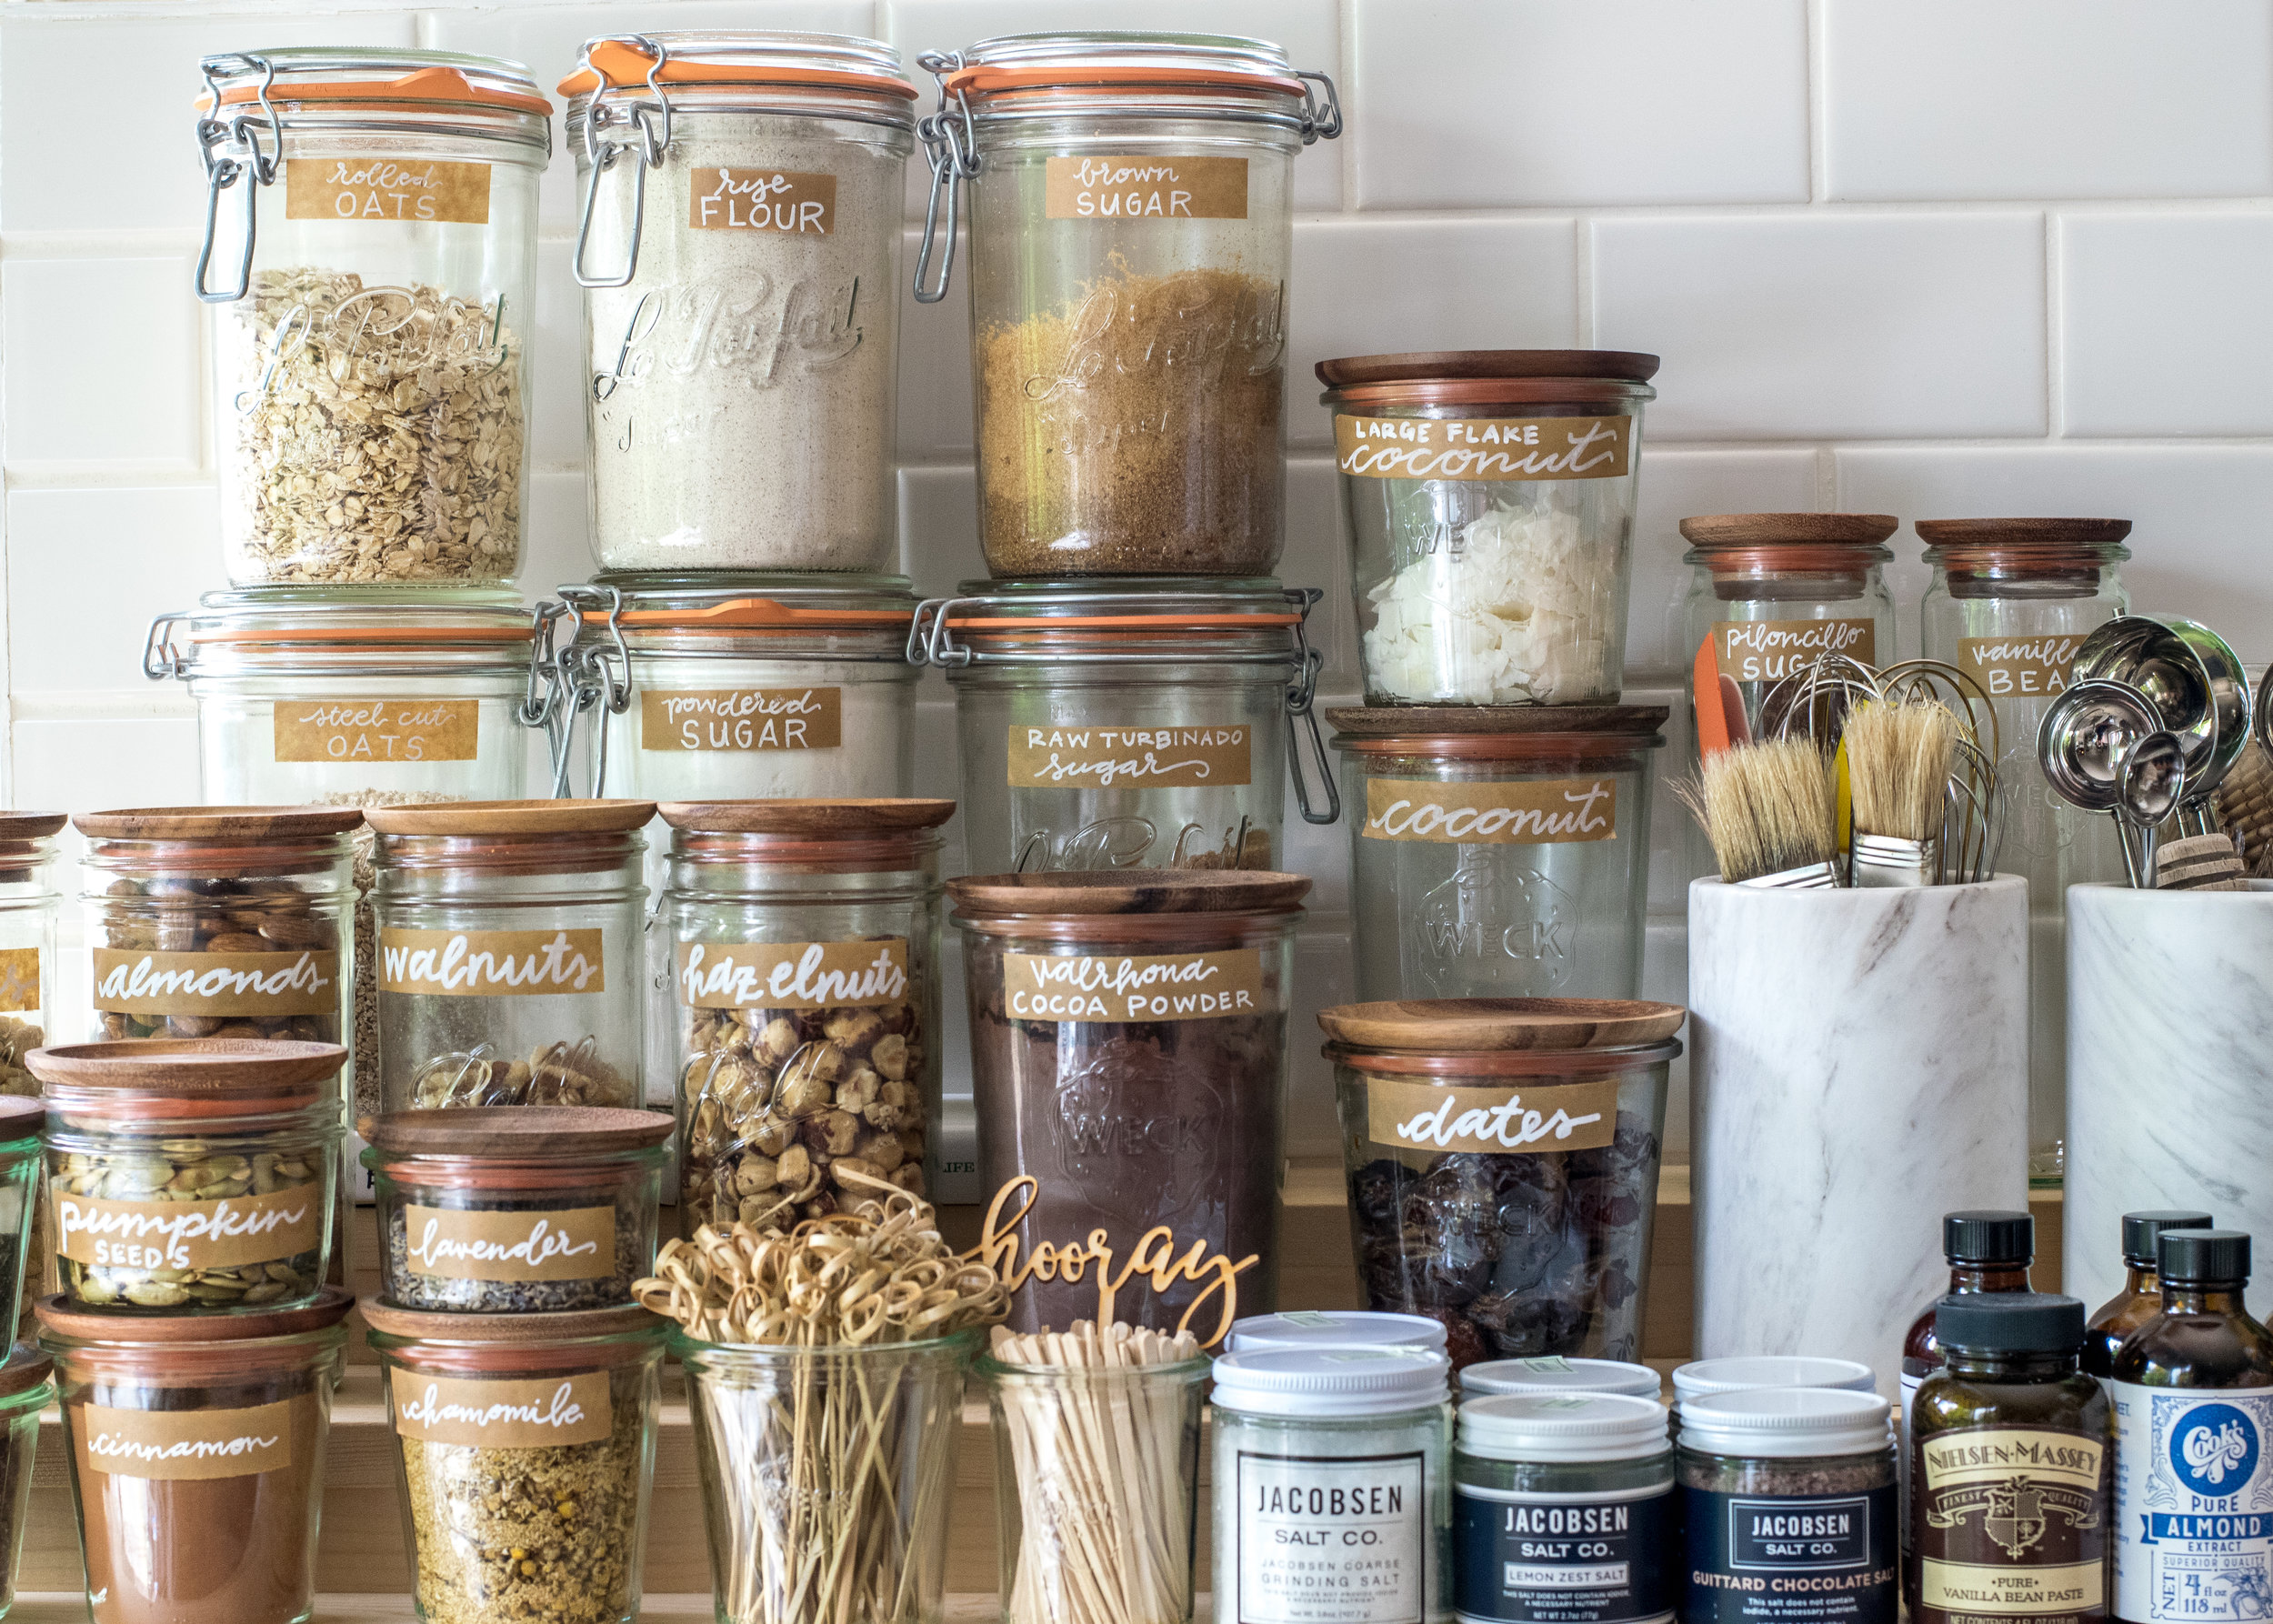 All Purpose Essentials  Pantry Staples — All Purpose Flour Child